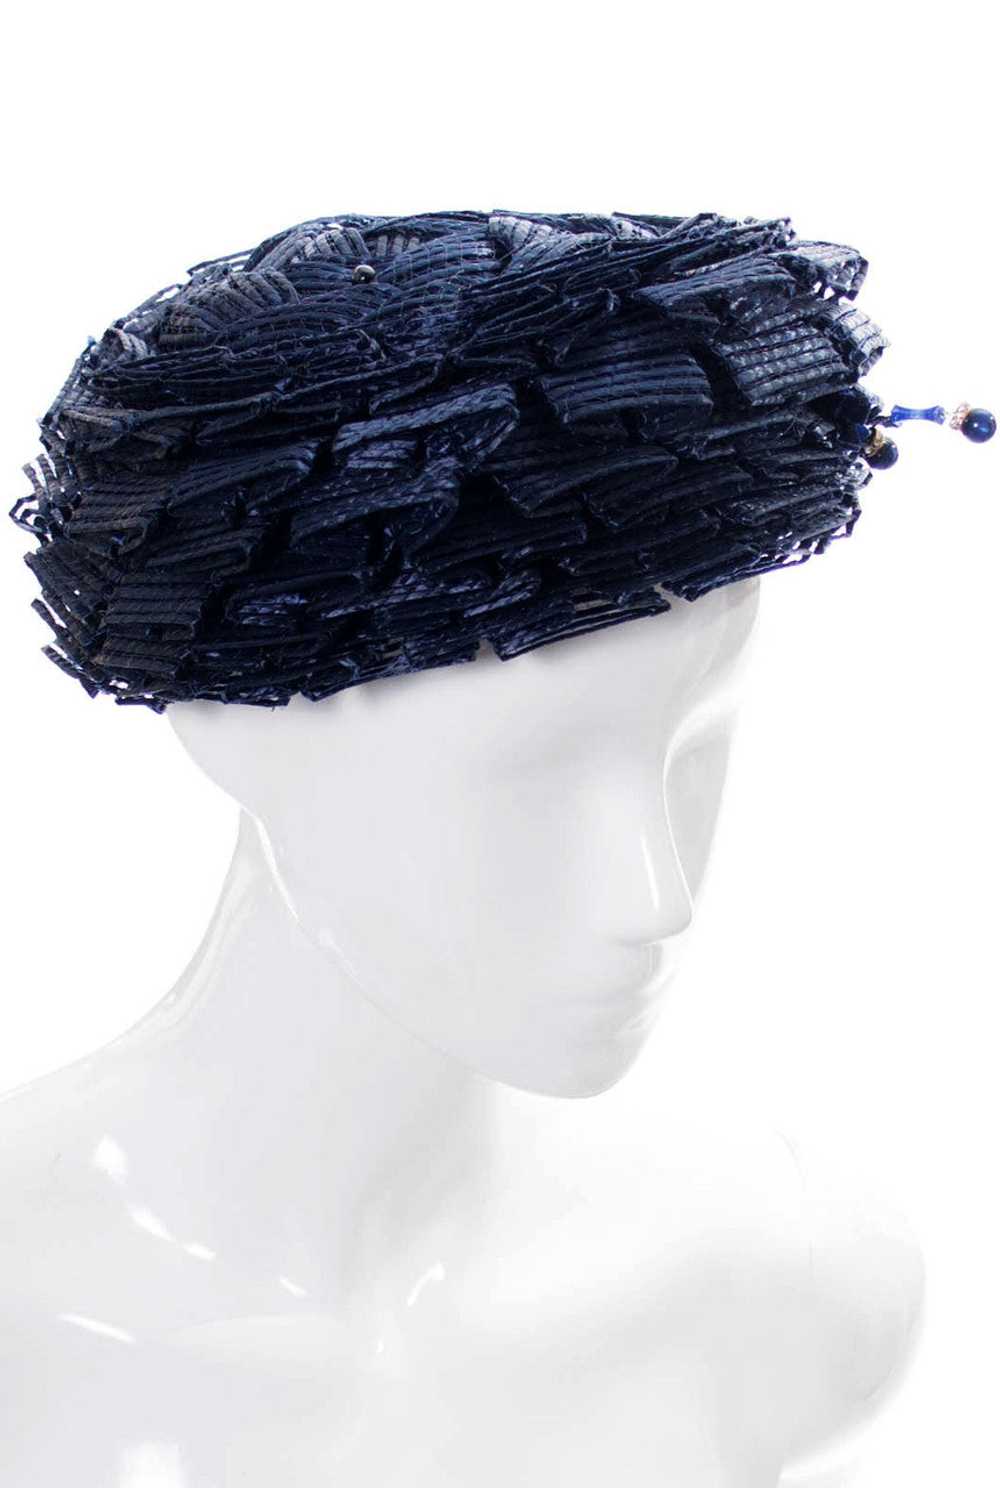 Schiaparelli navy blue vintage ruffled straw hat - image 4